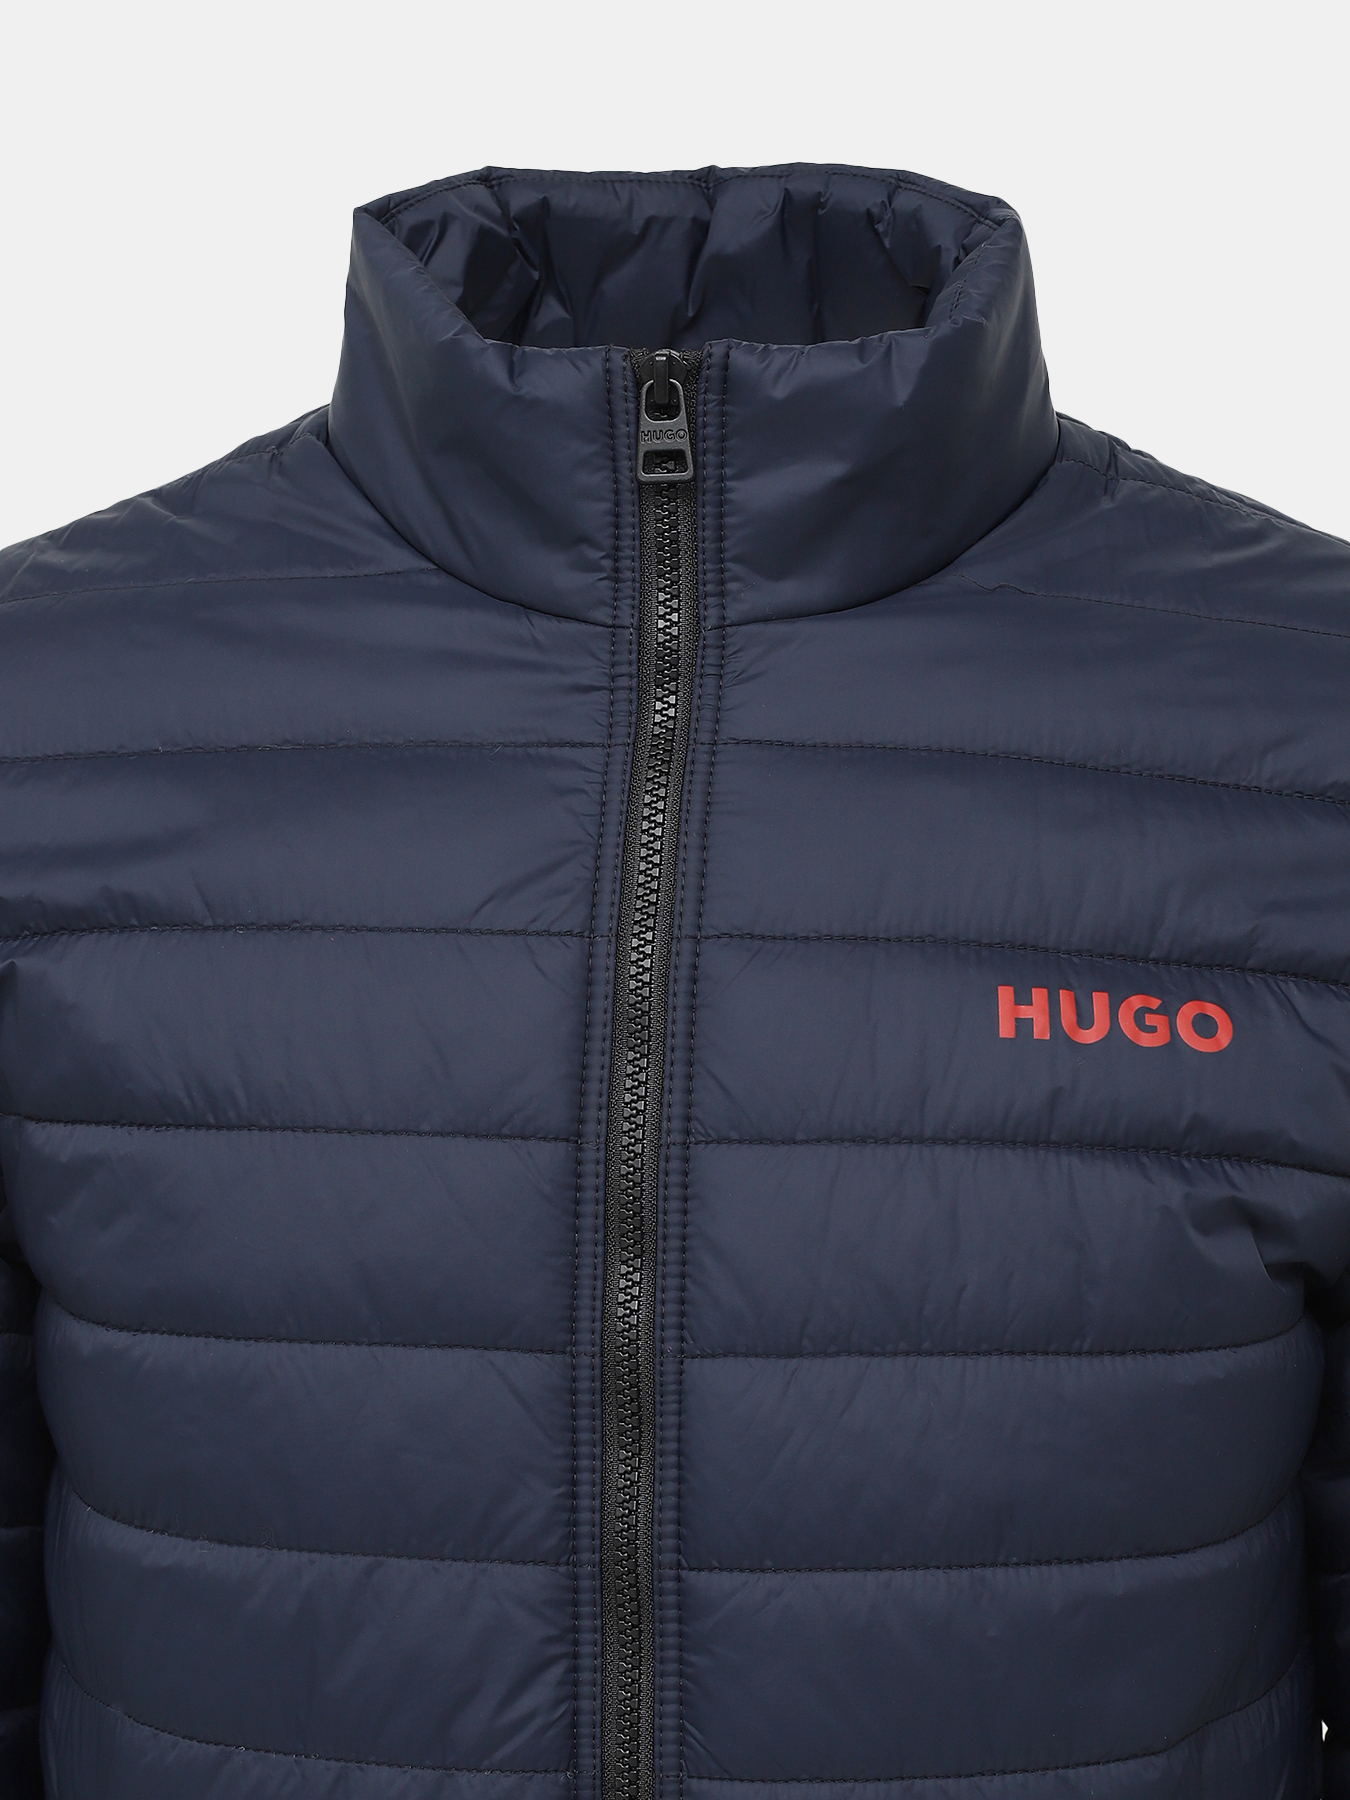 Куртка Benti HUGO 437018-046, цвет темно-синий, размер 54-56 - фото 3